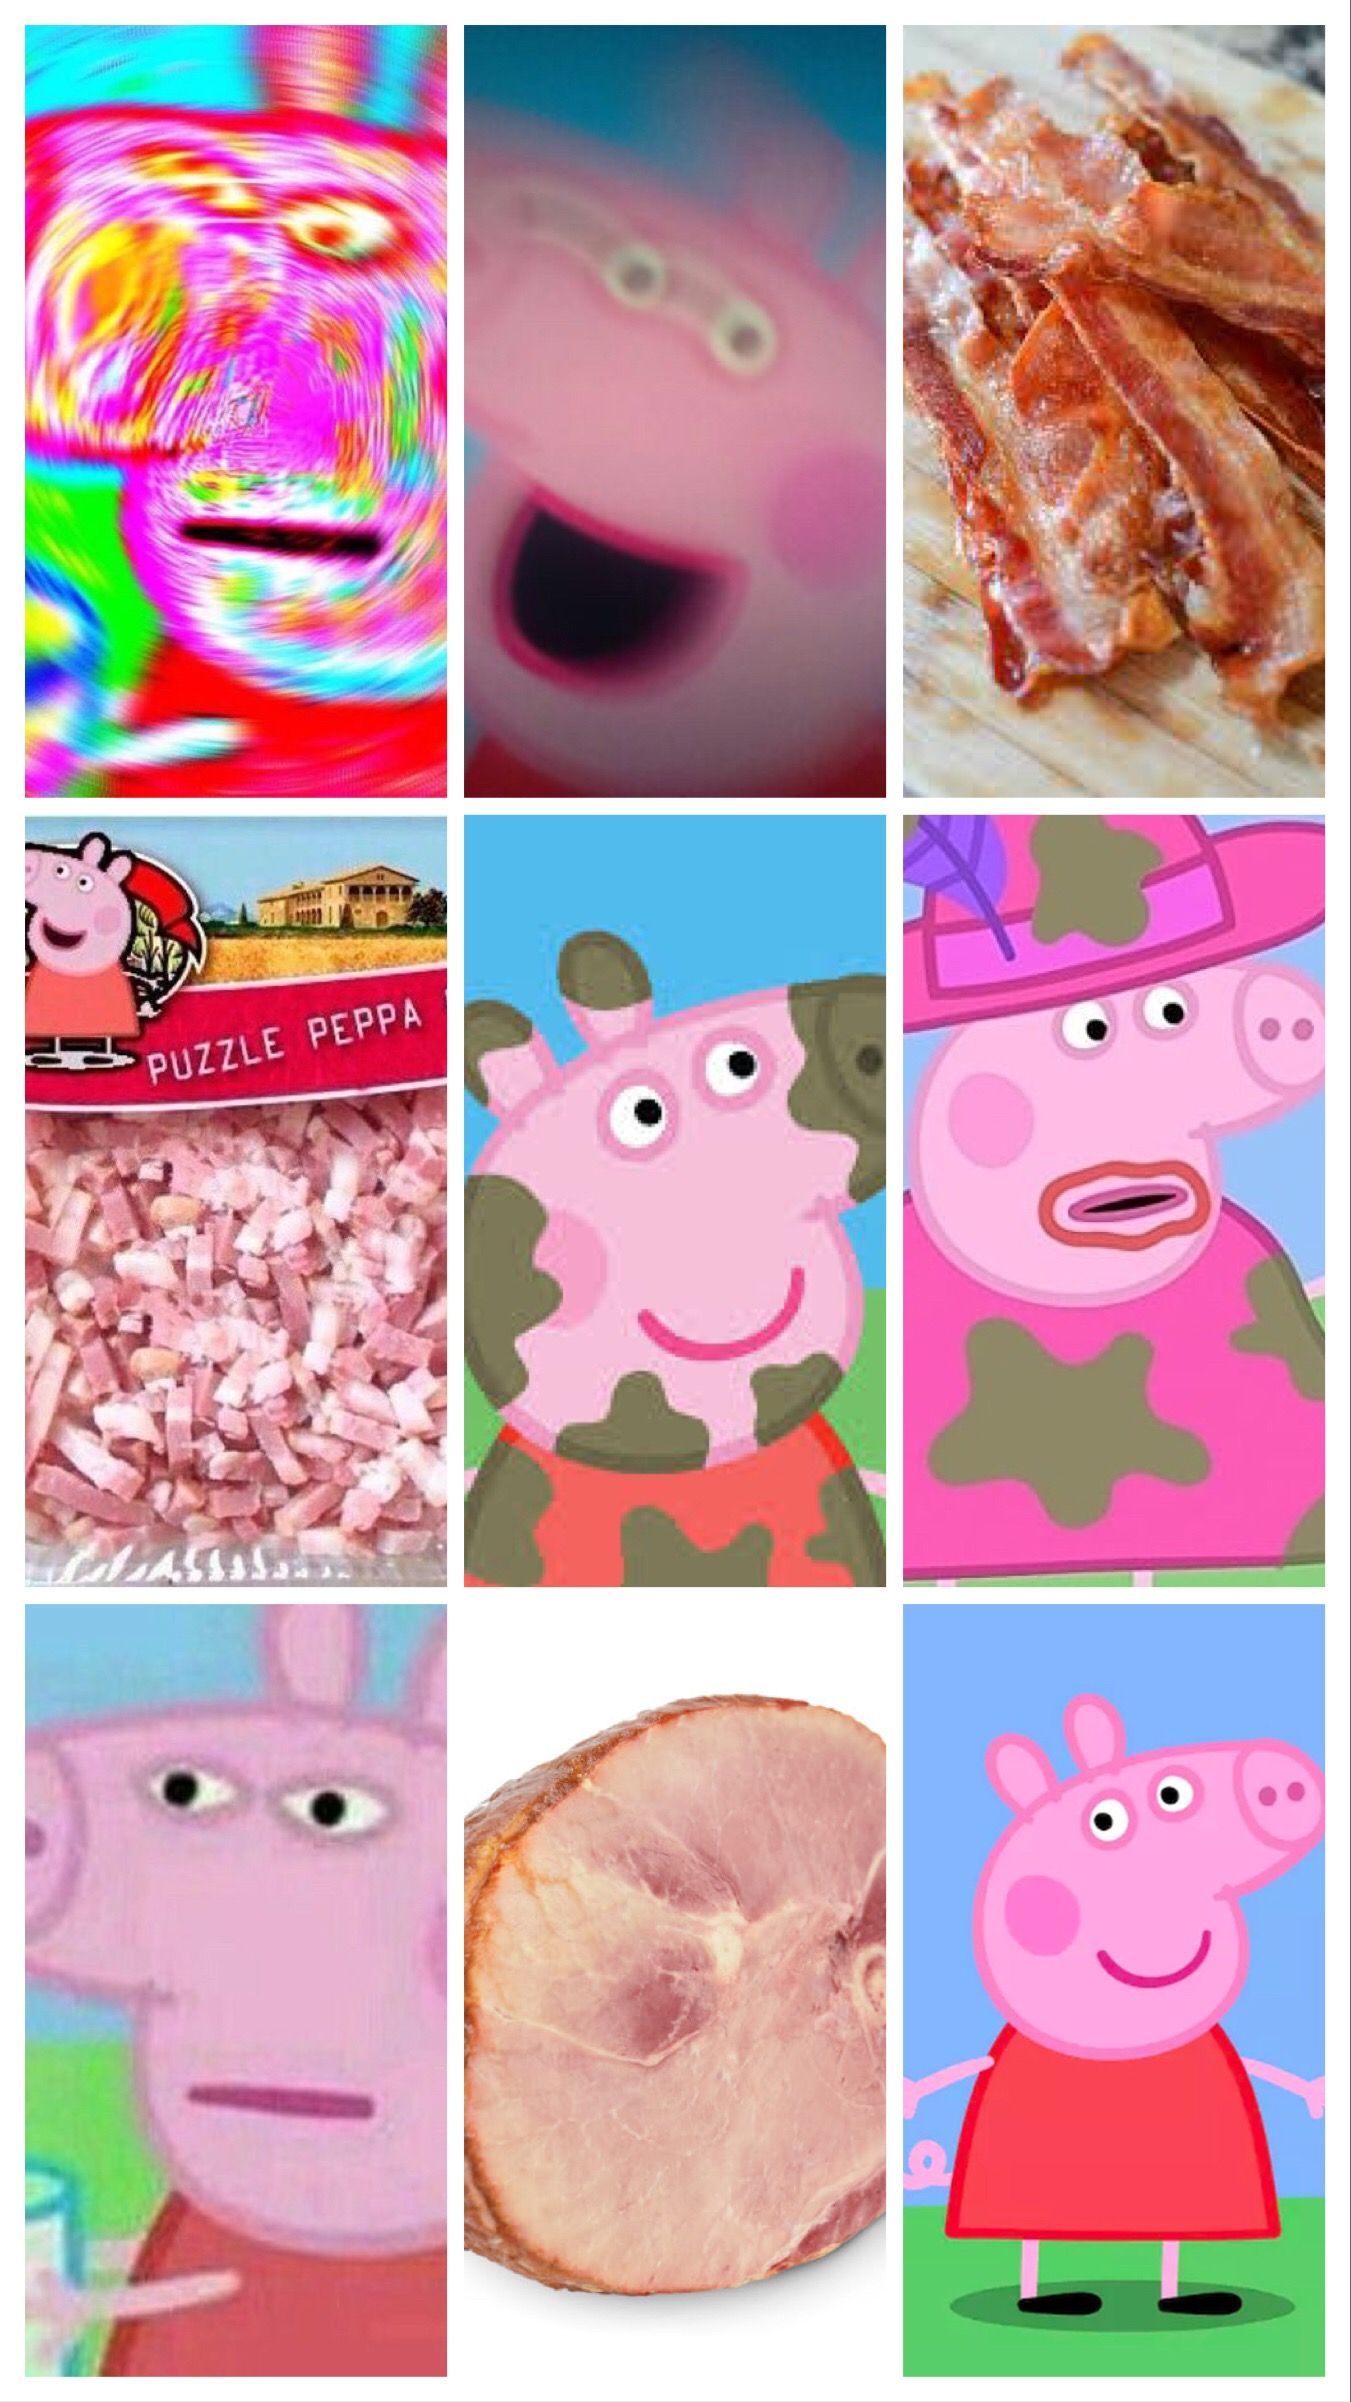 Peppa pig wallpaper. Peppa pig wallpaper, Pig wallpaper, Peppa pig memes